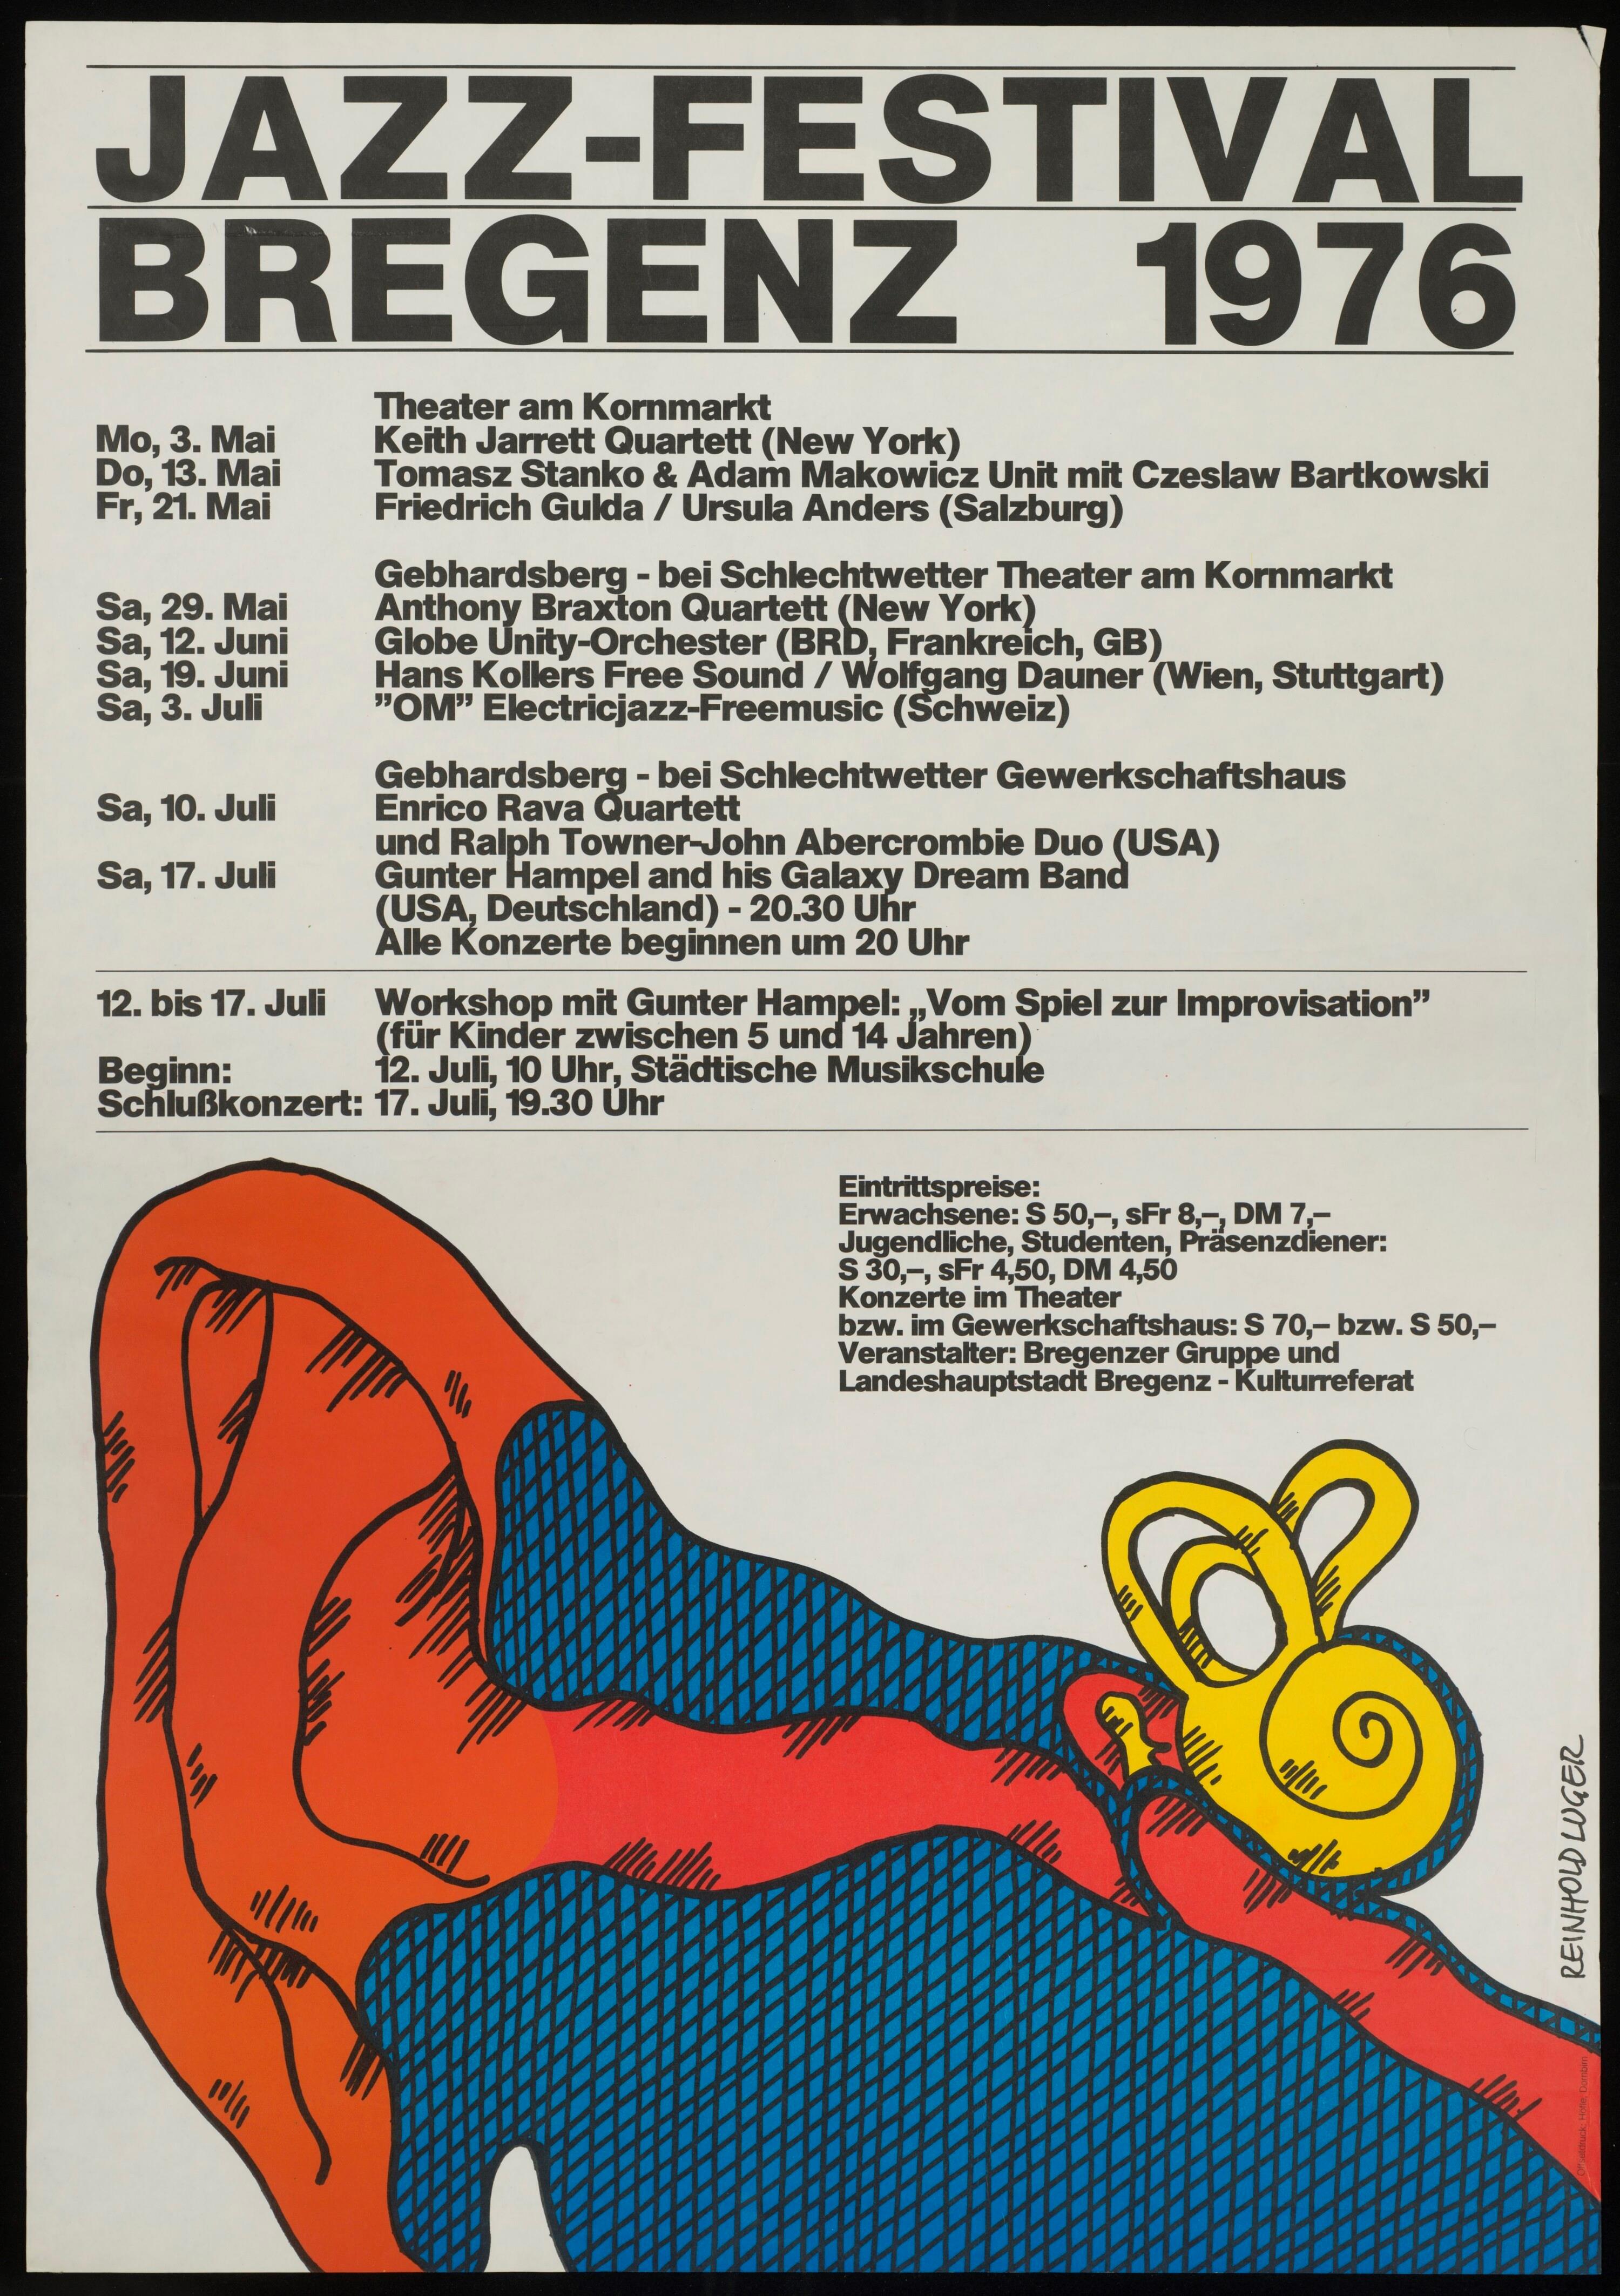 Jazz-Festival Bregenz 1976></div>


    <hr>
    <div class=